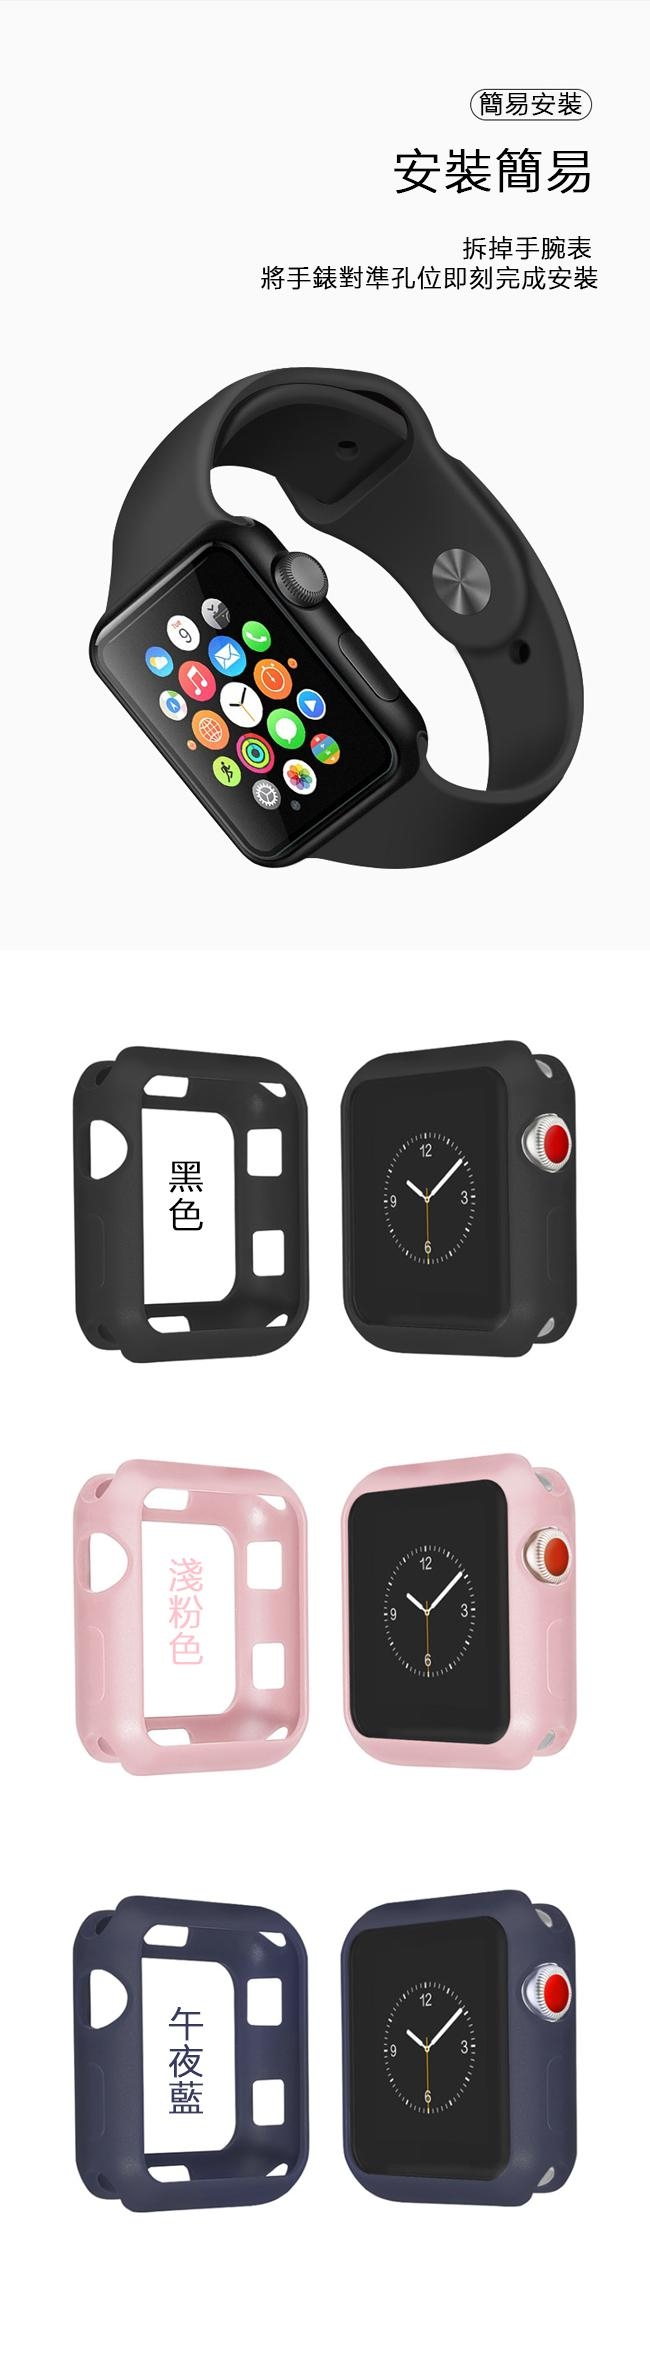 Apple Watch 4代 磨砂TPU保護殼 軟殼 防摔 手錶保護套